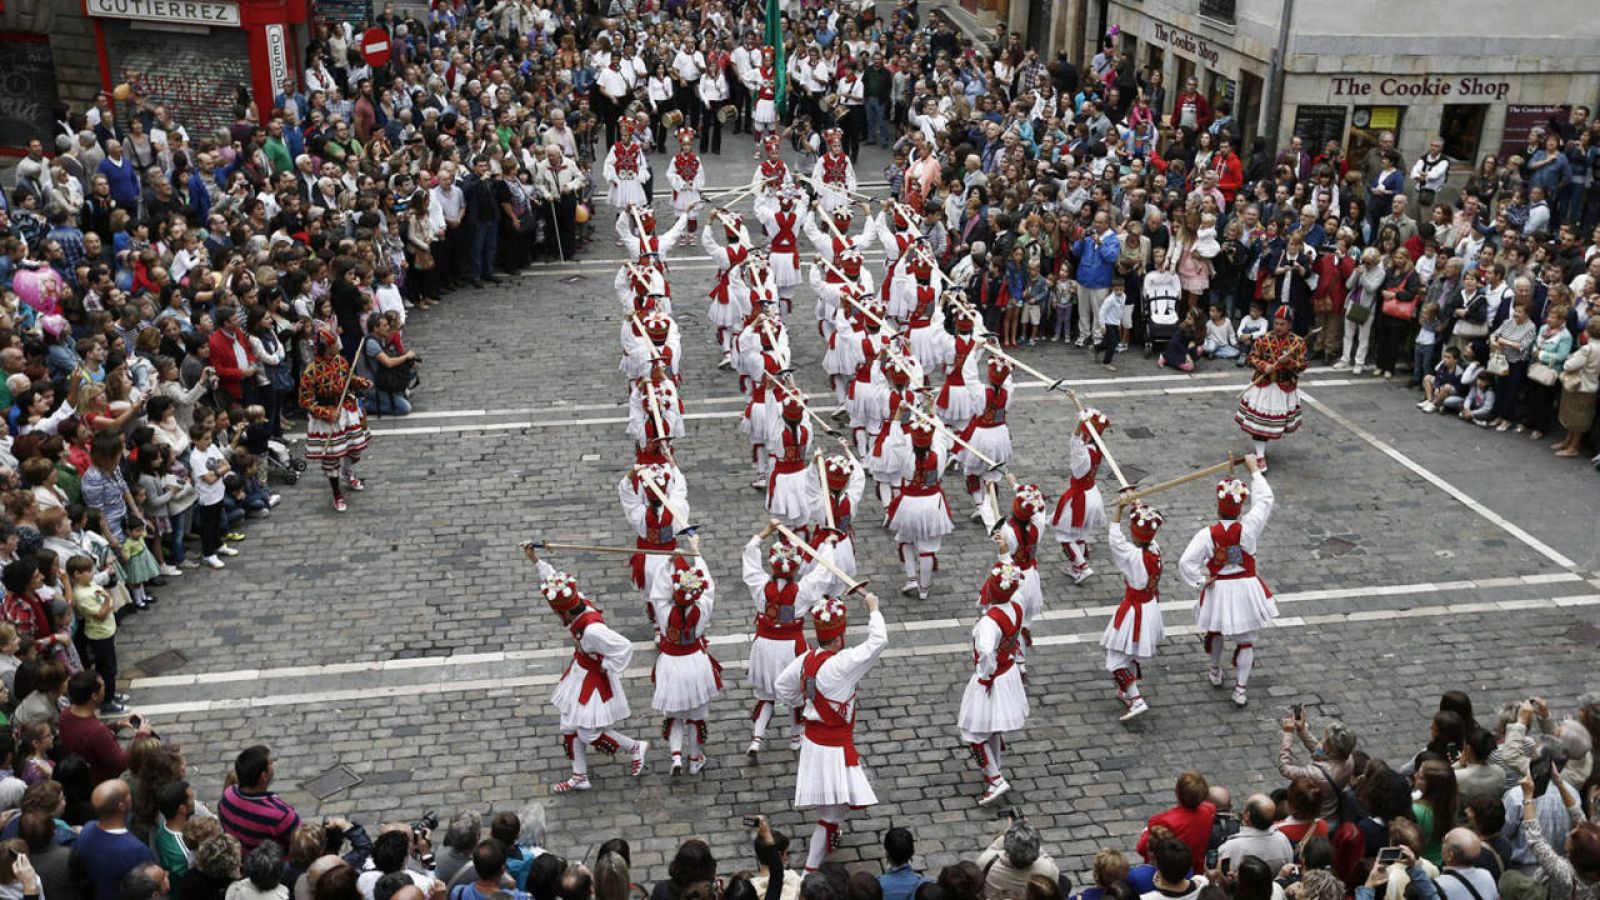 Dantzaris del grupo de Danzas Municipal de Pamplona interpretan el baile de espadas